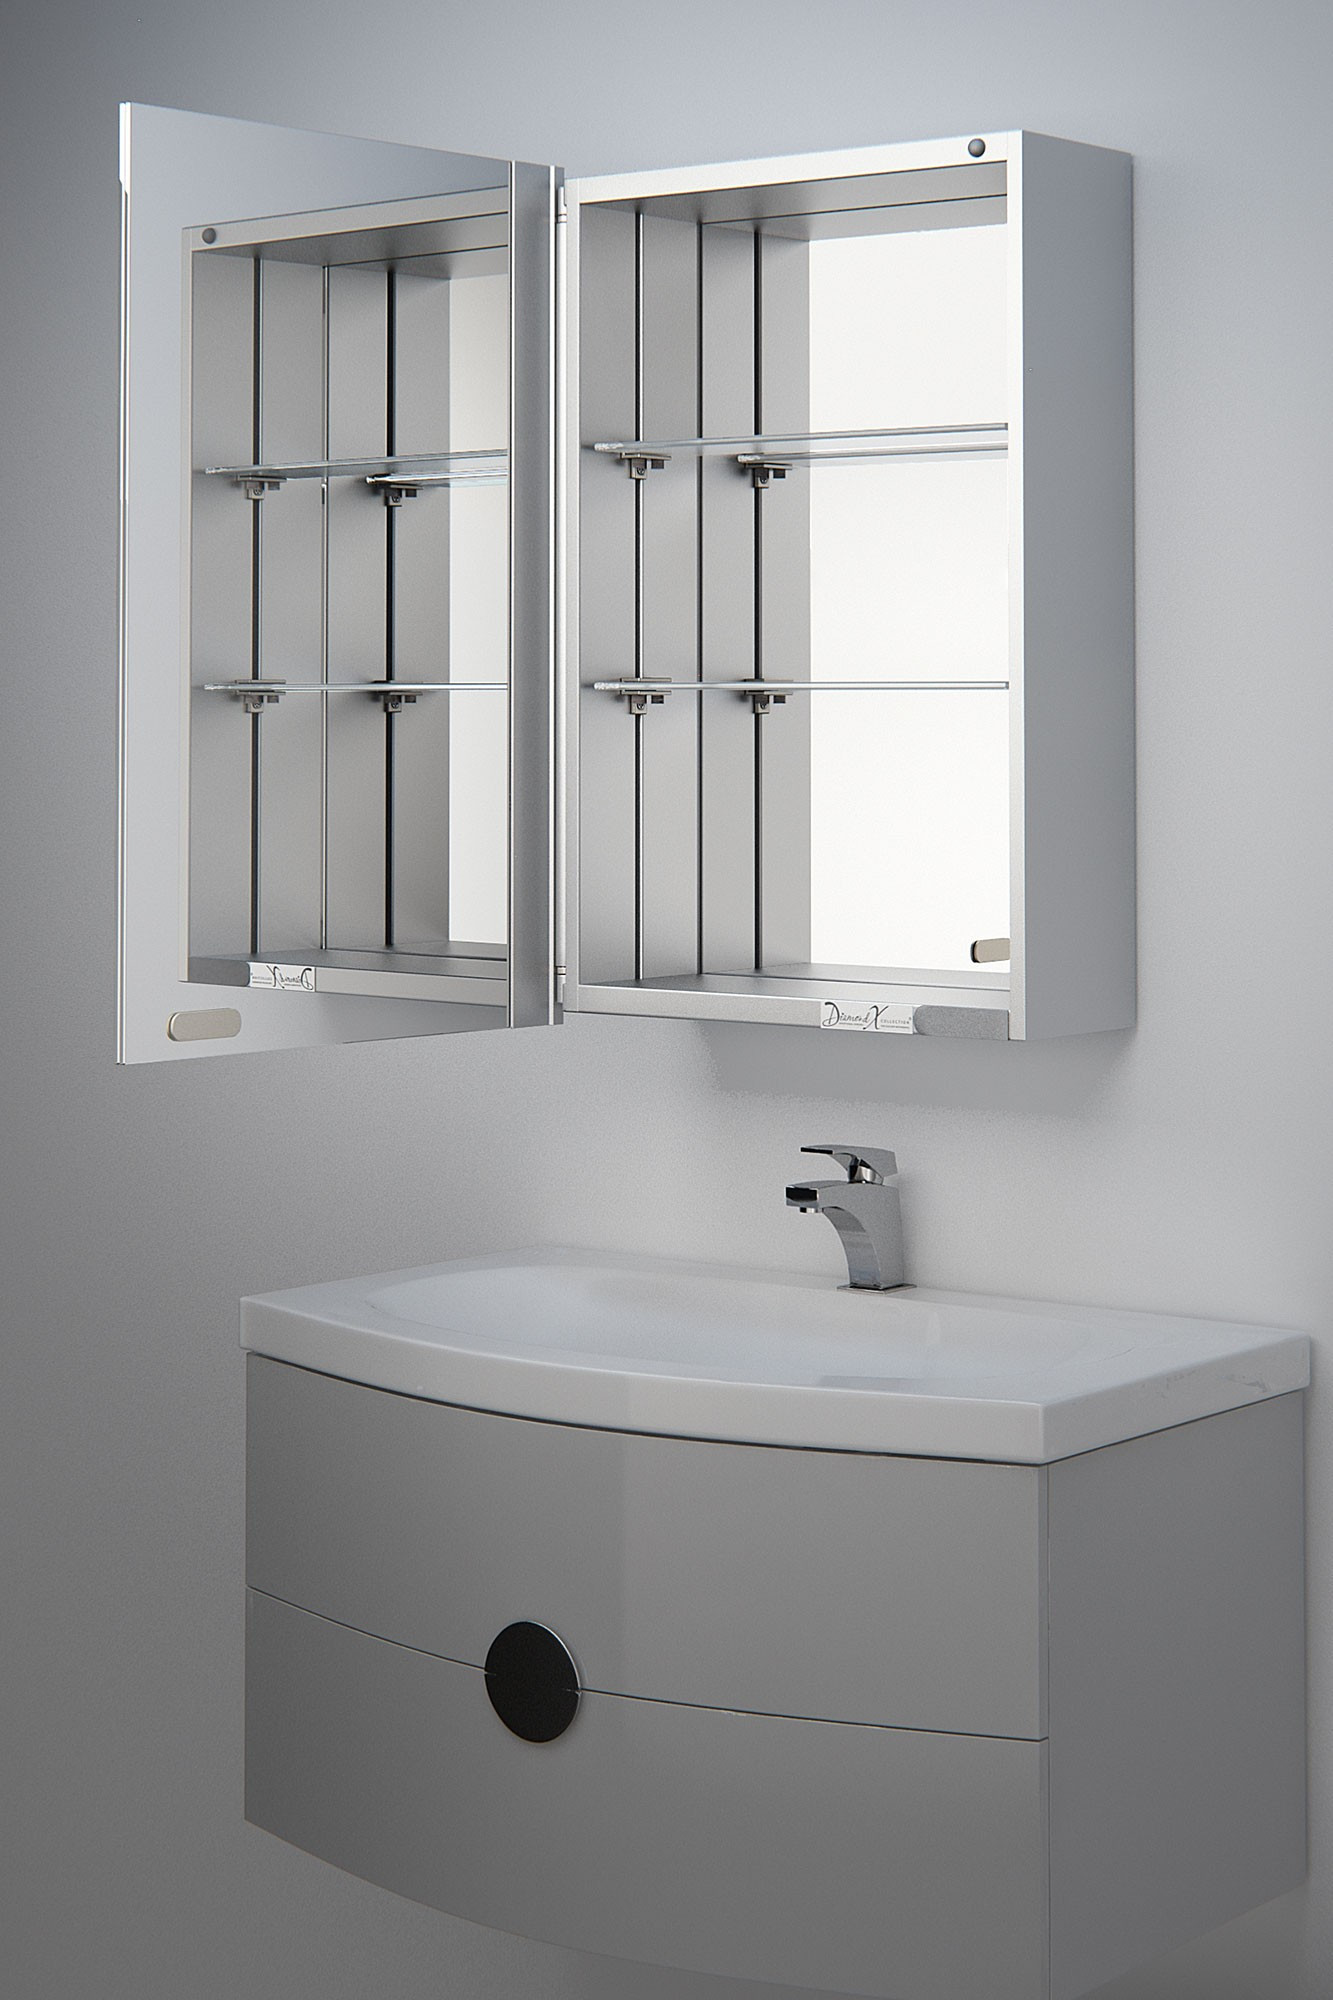 Mirror Bathroom Cabinet
 Alban mirrored bathroom cabinet mirror H 600mm x W 400mm